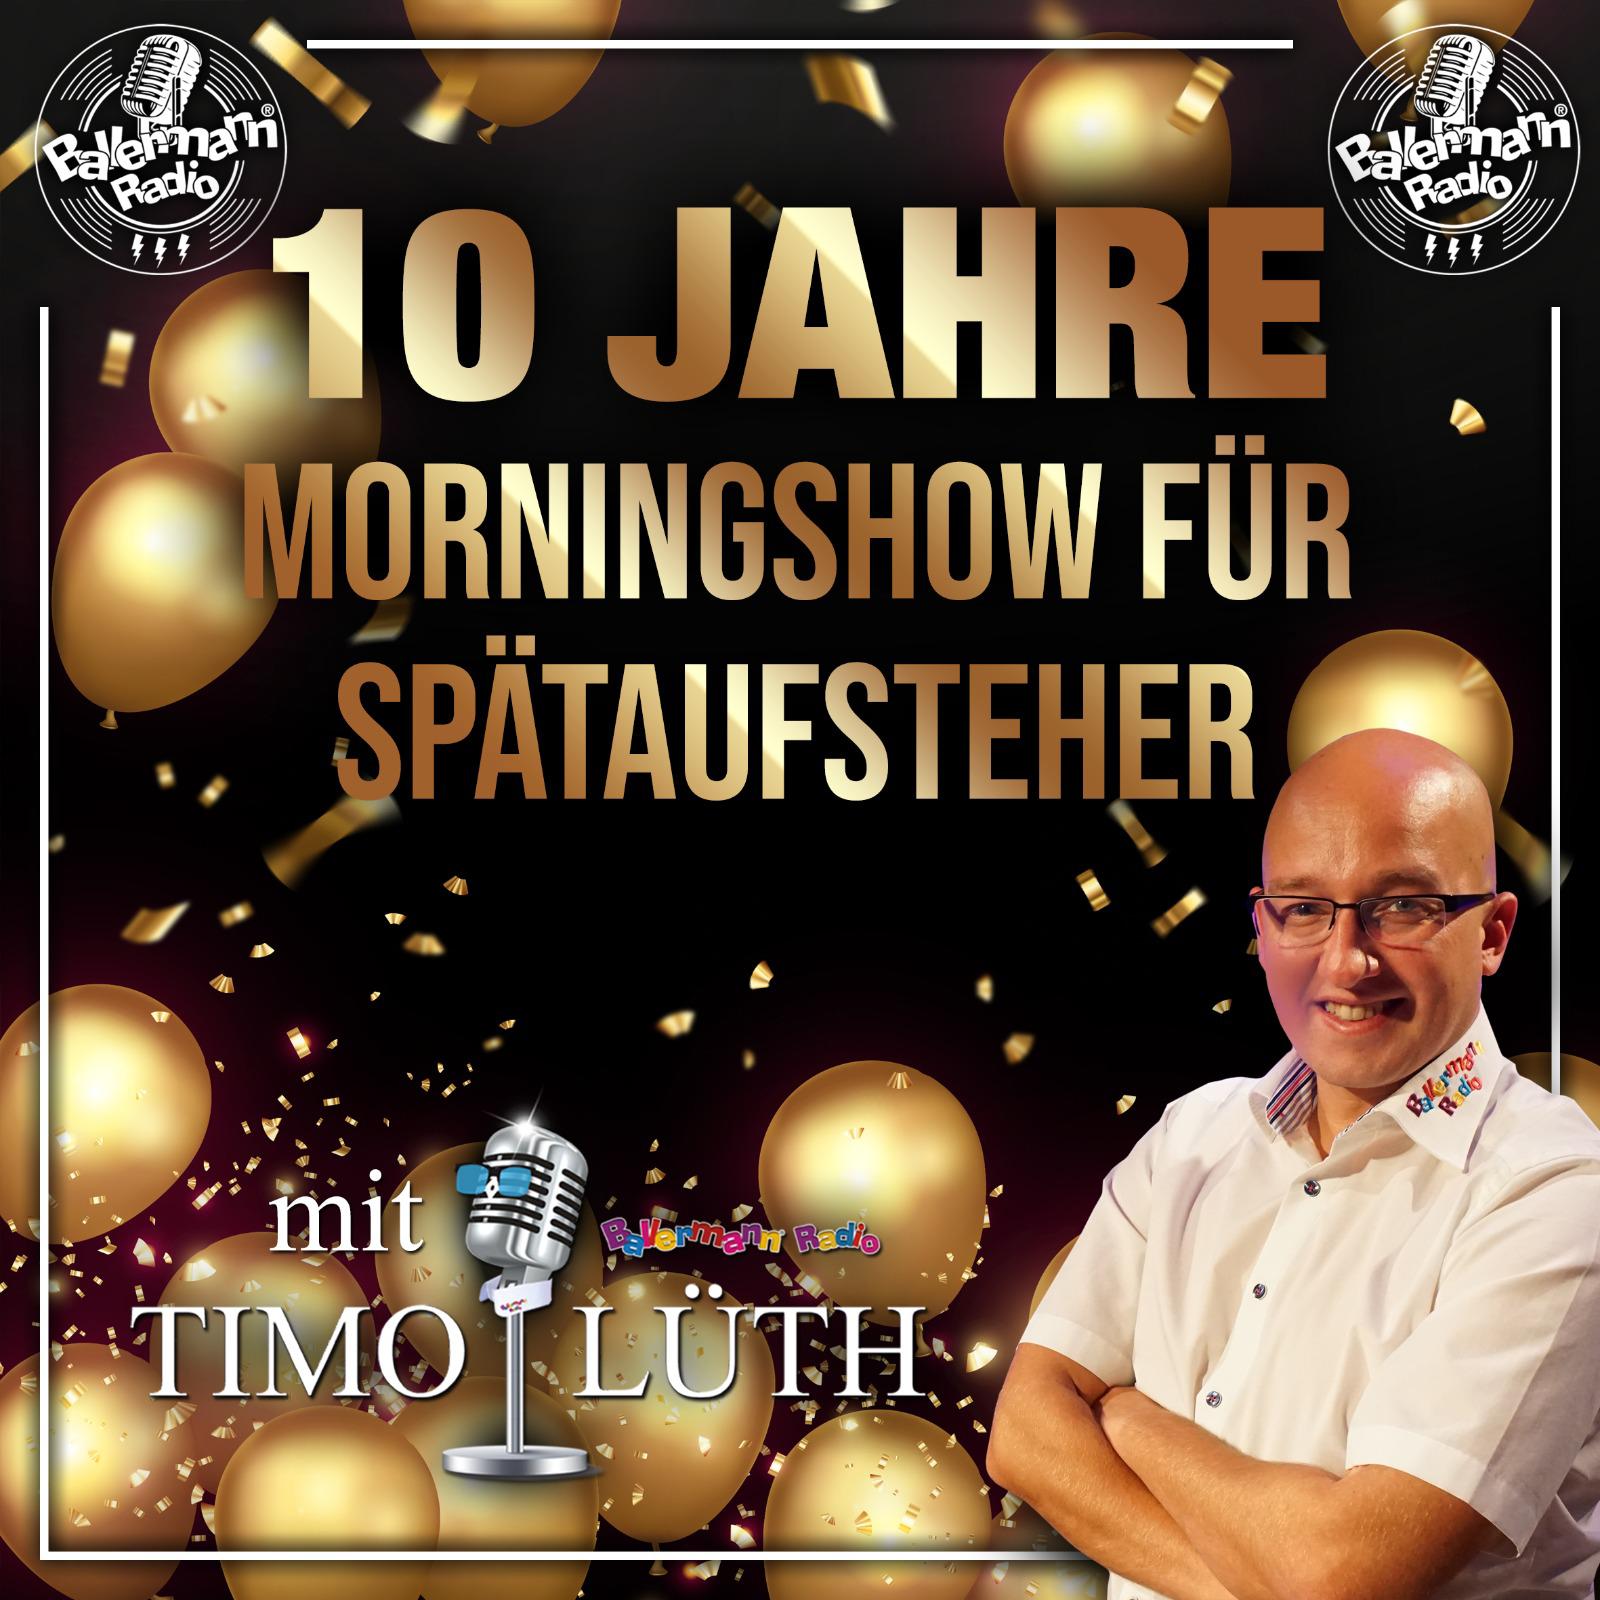 10 Jahre Morningshow auf Ballermann Radio: Timo Lüth feiert Jubiläum in Sondersendung